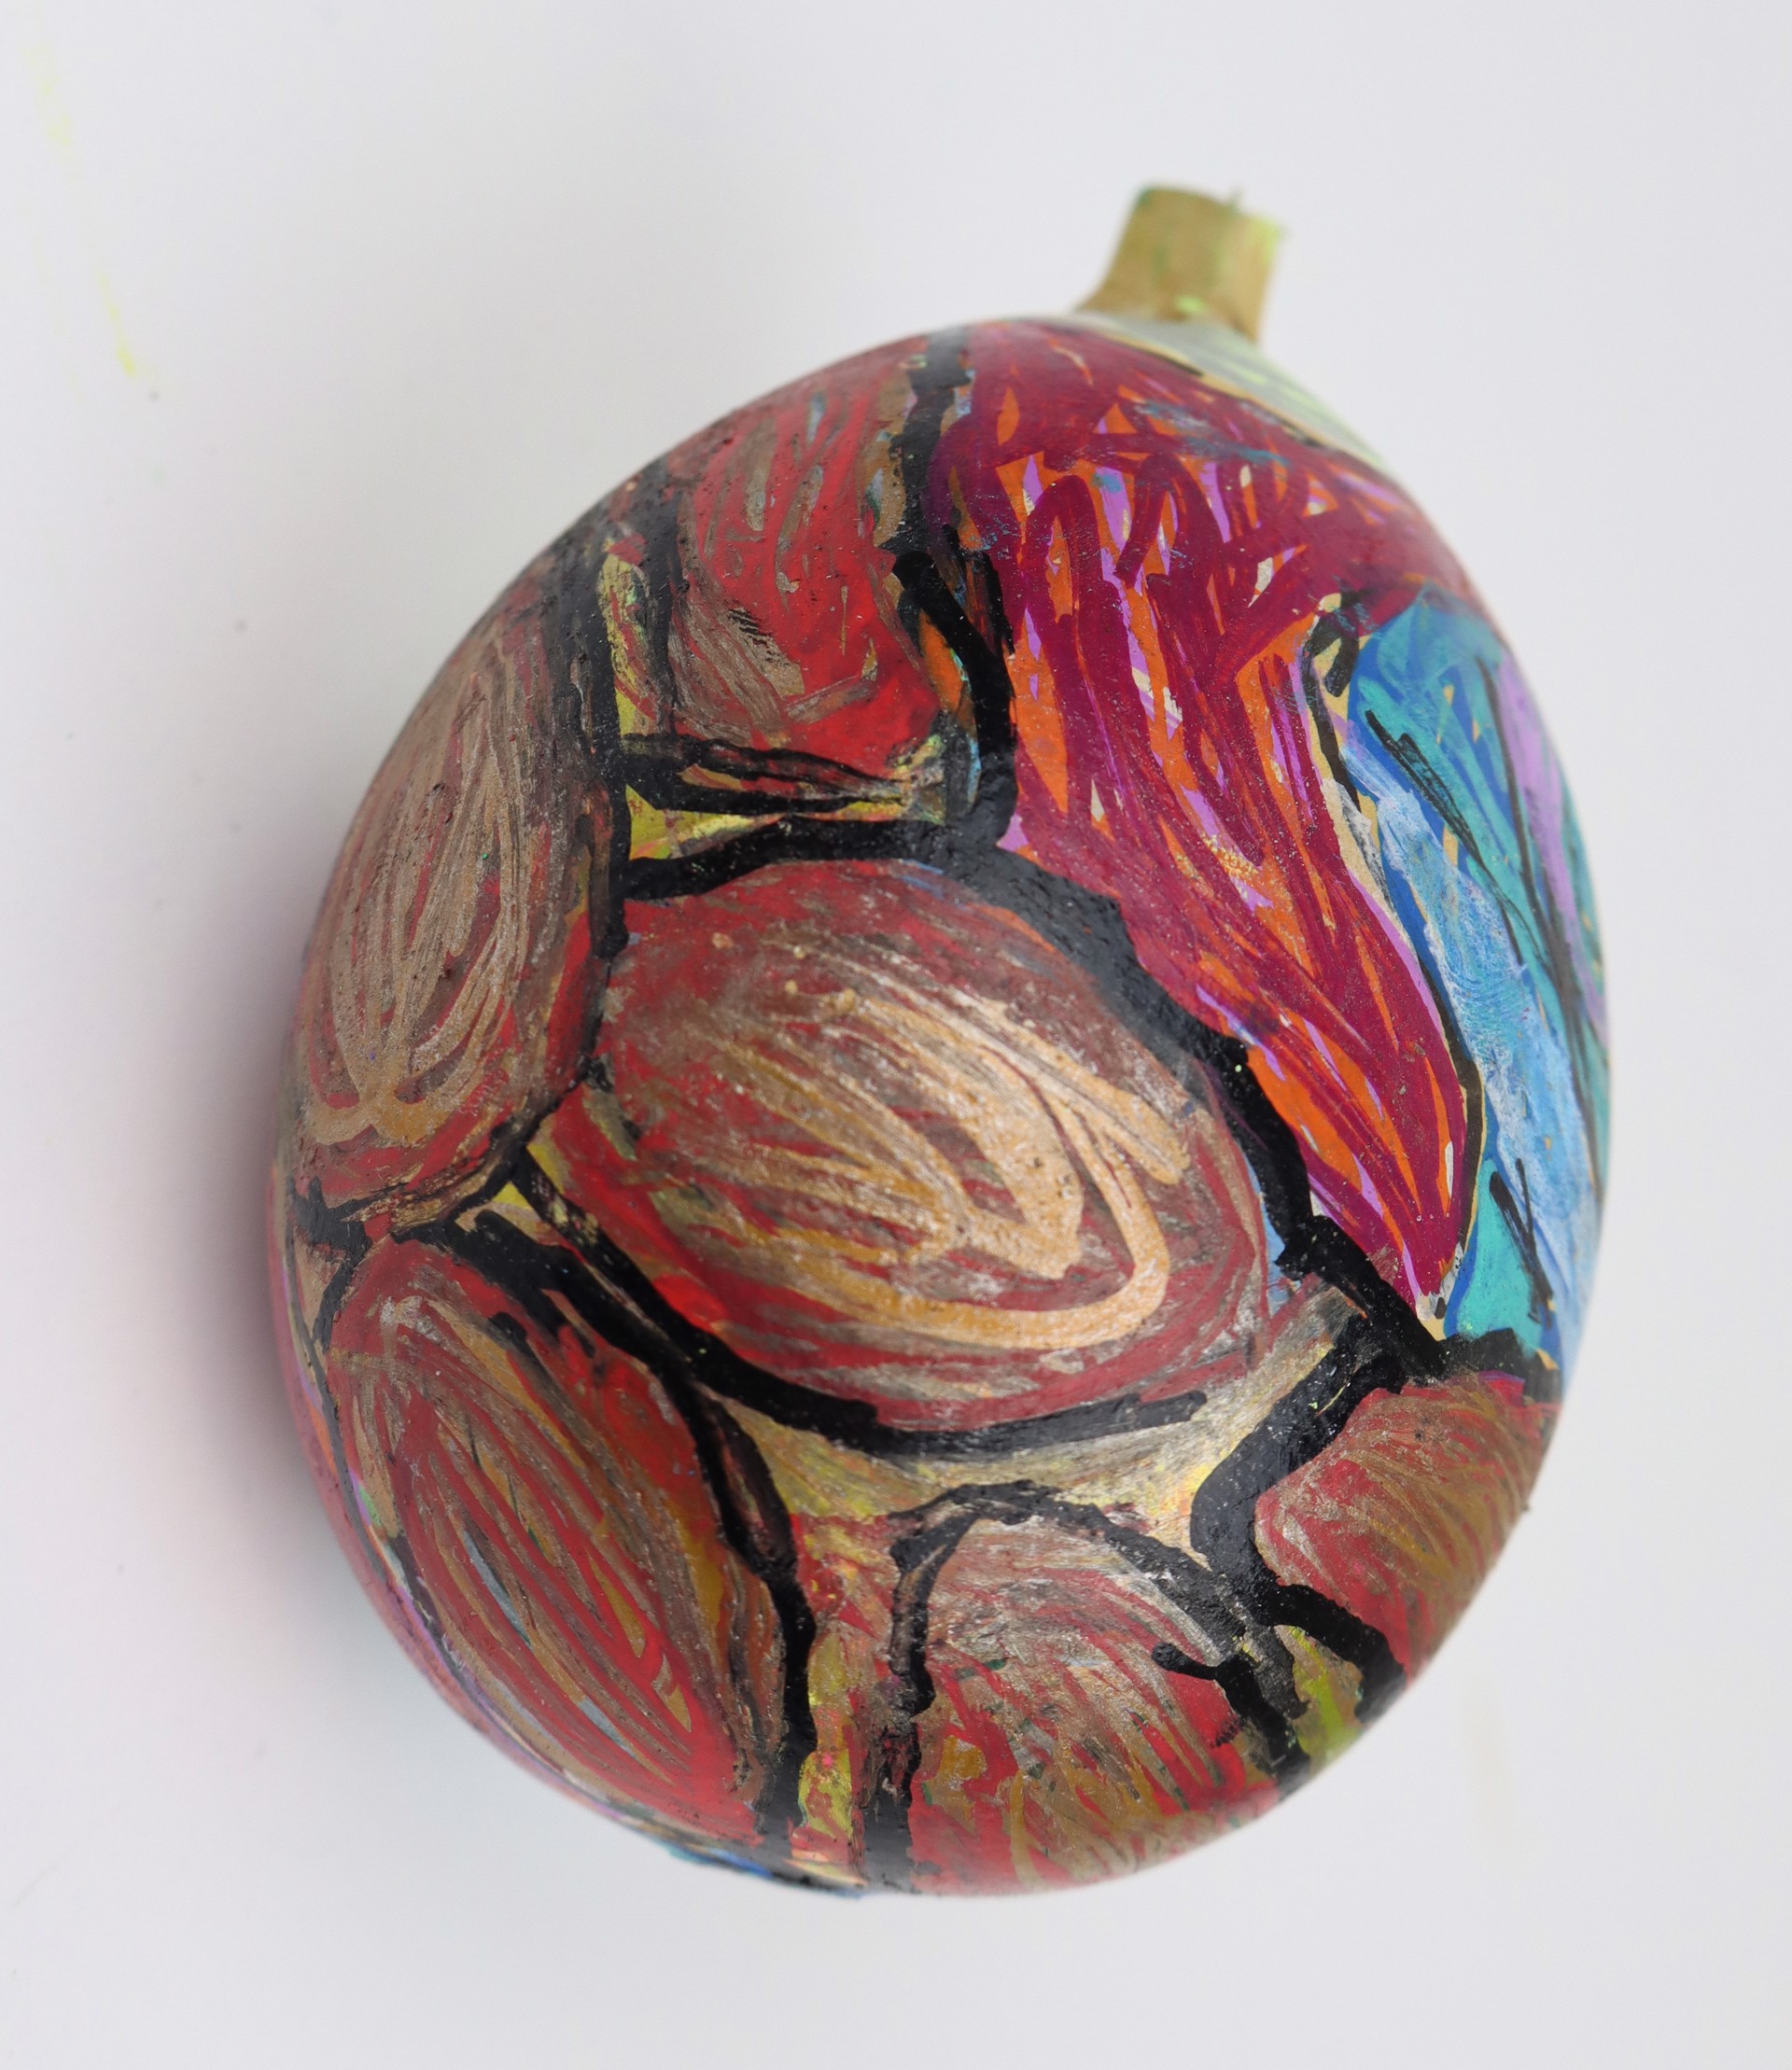 Challah Back Gourd (gourd ornament) by Mara Clawson